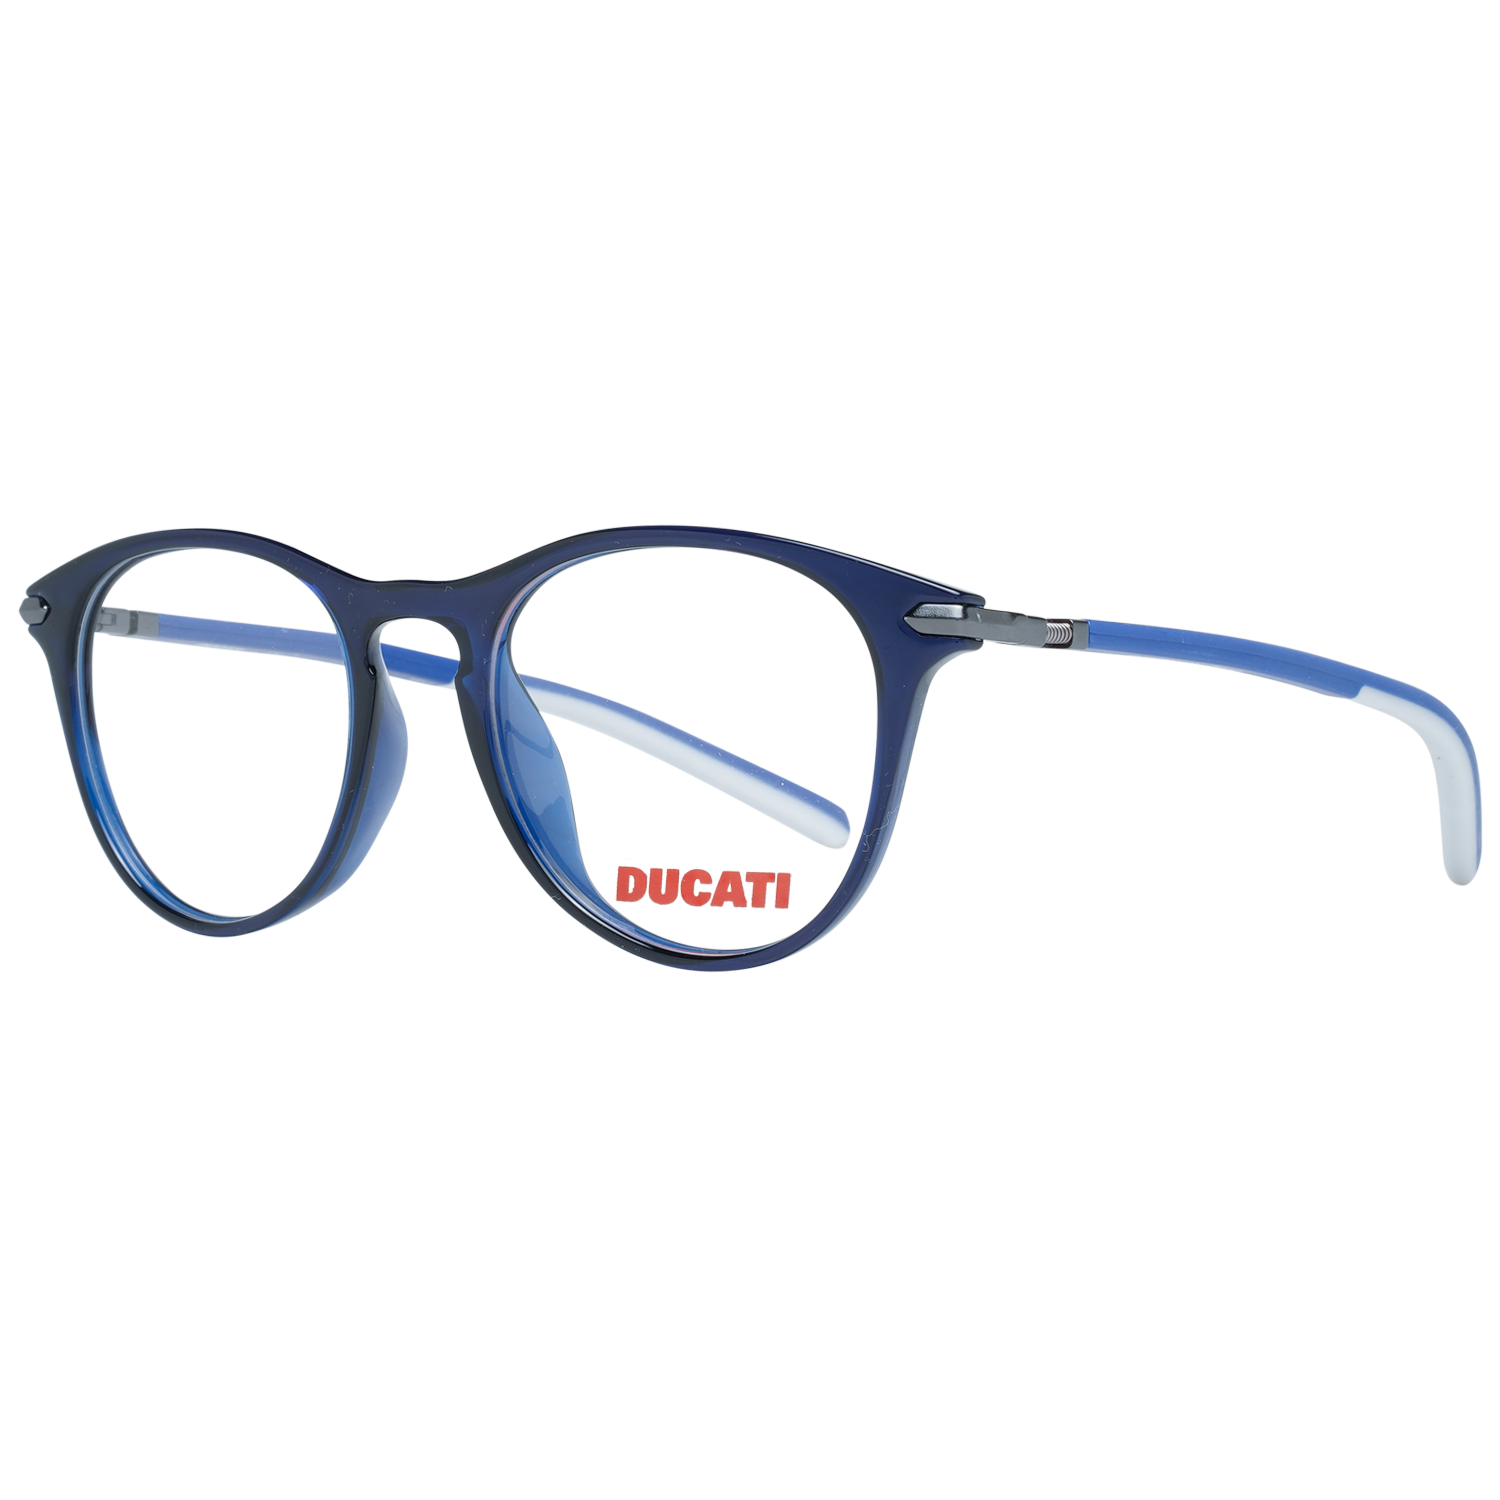 Ducati Frames Ducati Optical Frame DA1002 600 50 Eyeglasses Eyewear UK USA Australia 